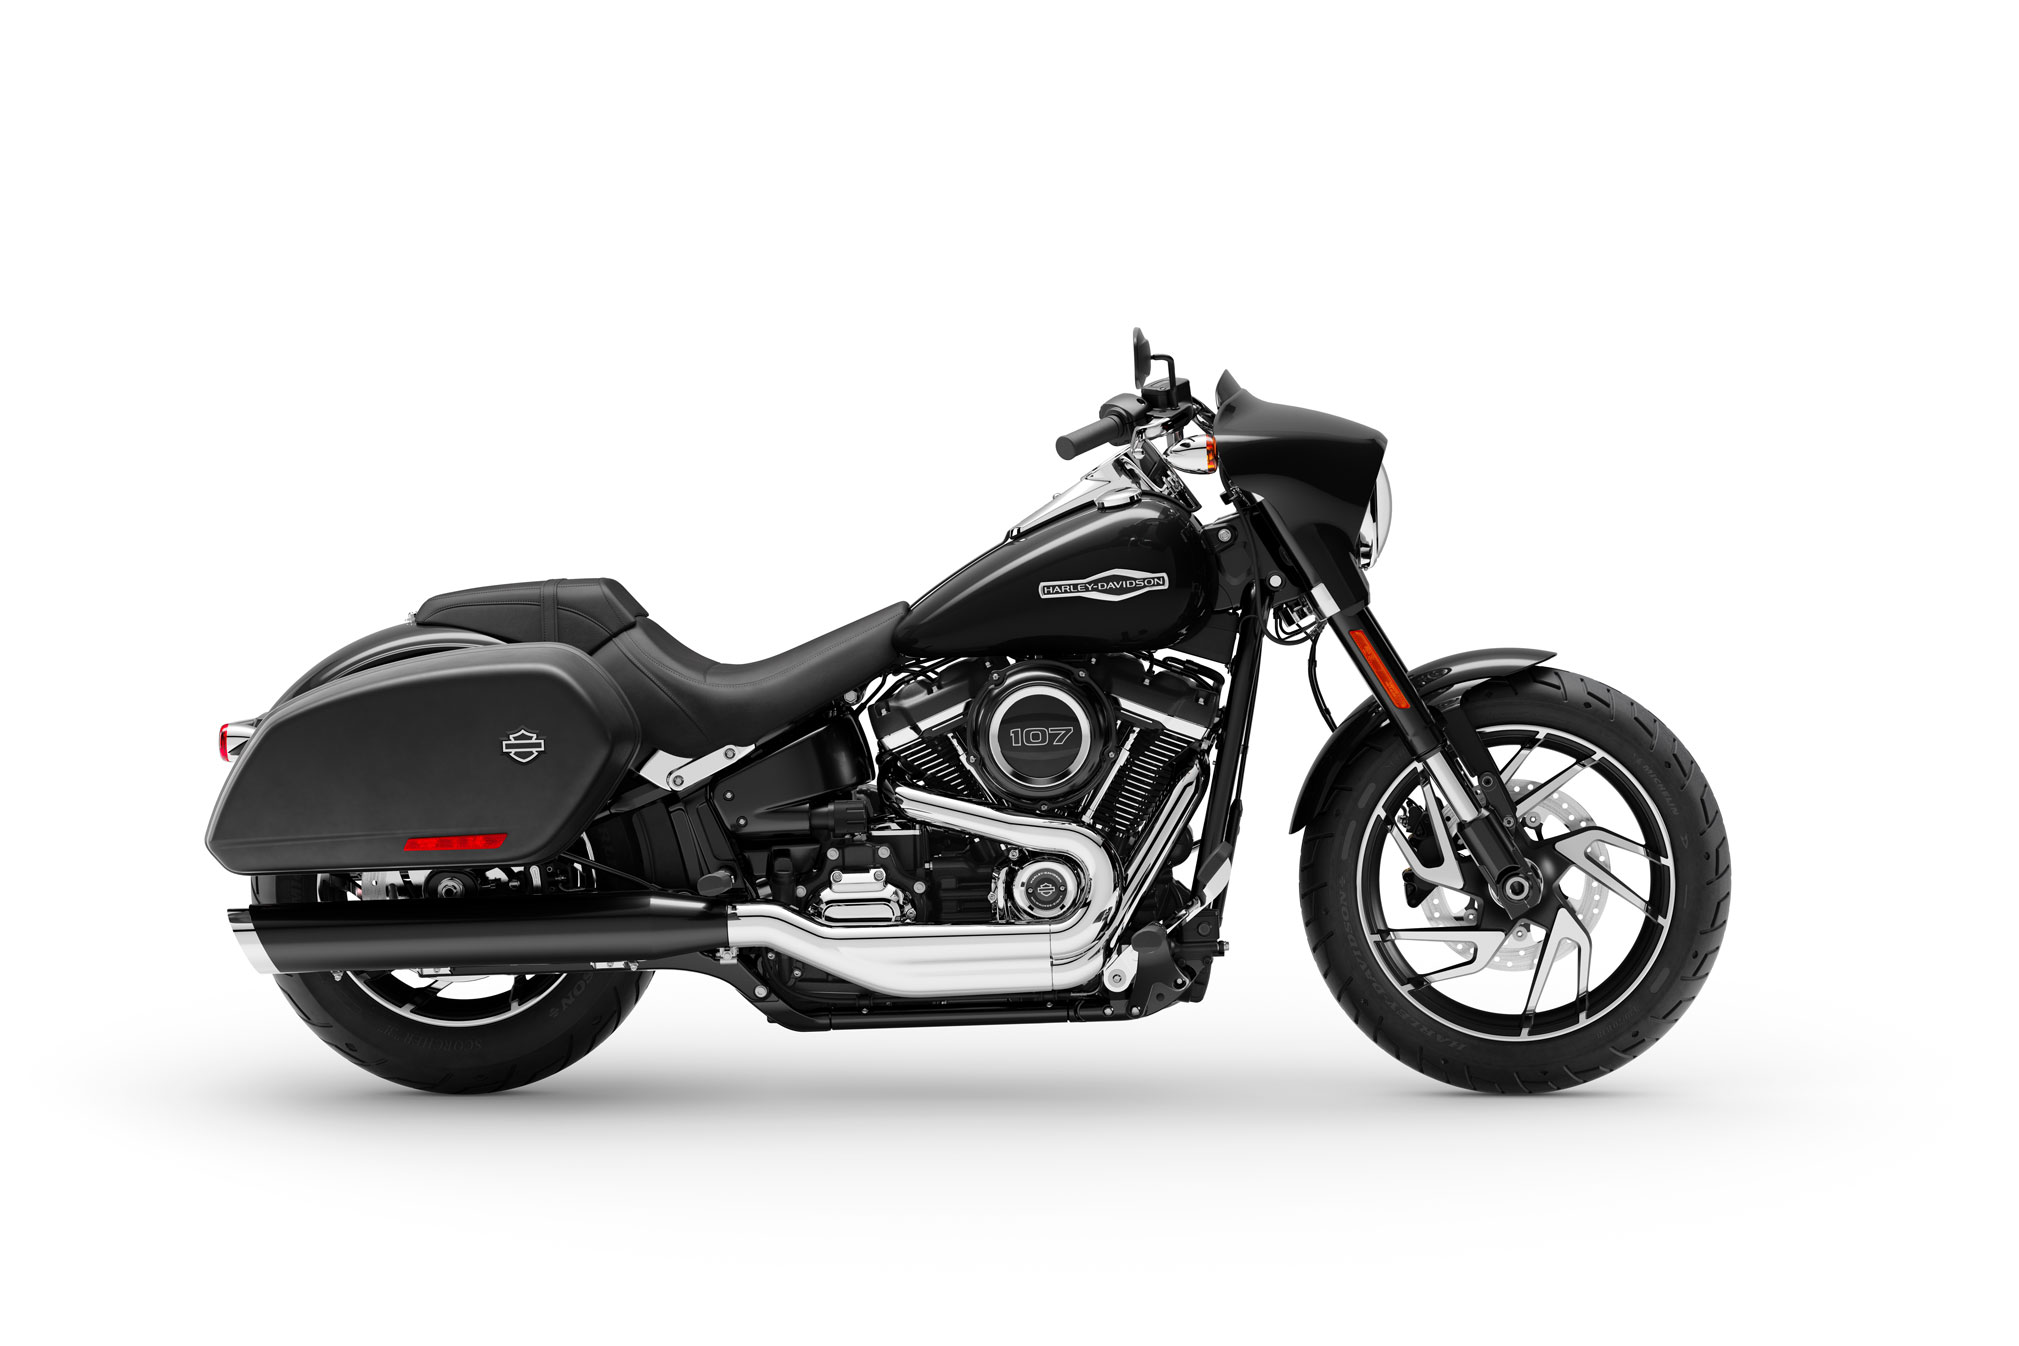  2019 Harley Davidson Sport Glide Guide Total Motorcycle